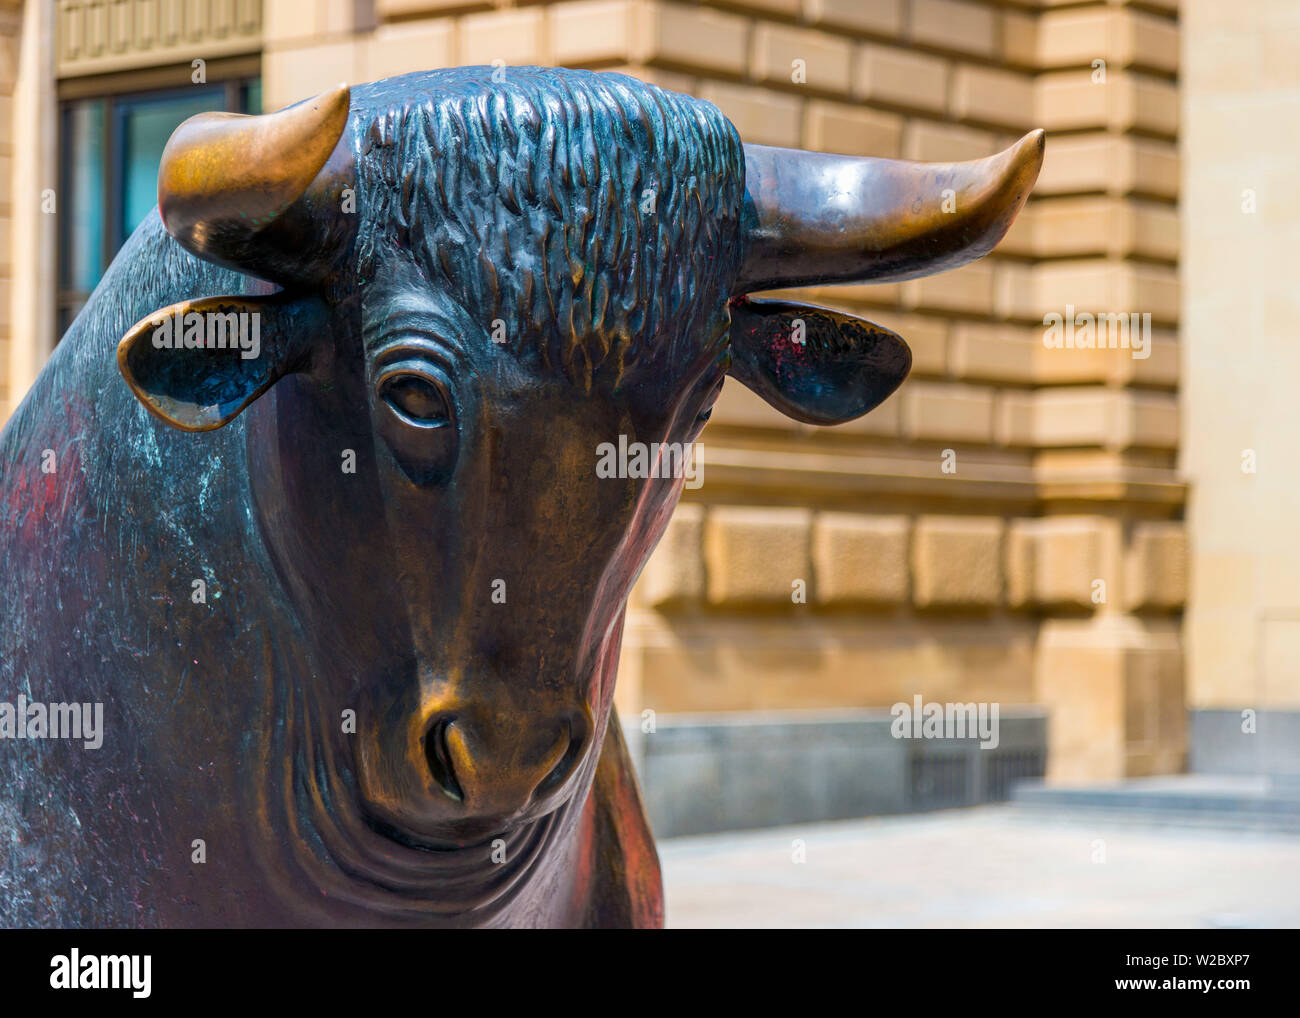 Germany, Hessen, Frankfurt Am Main, Frankfurt Stock Exchange (Frankfurter Borse), Bull statue Stock Photo